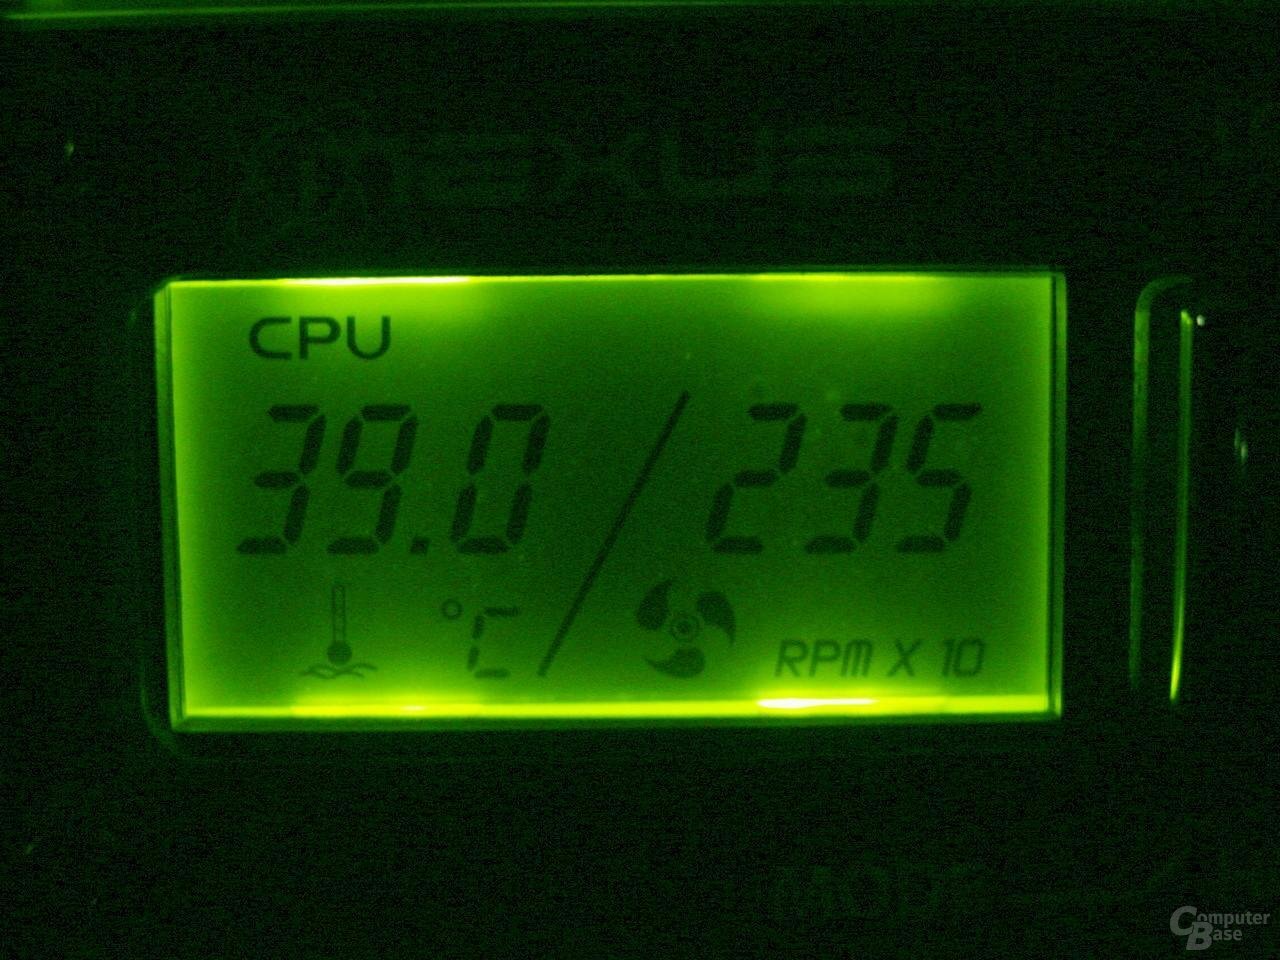 NXP-101 - Display